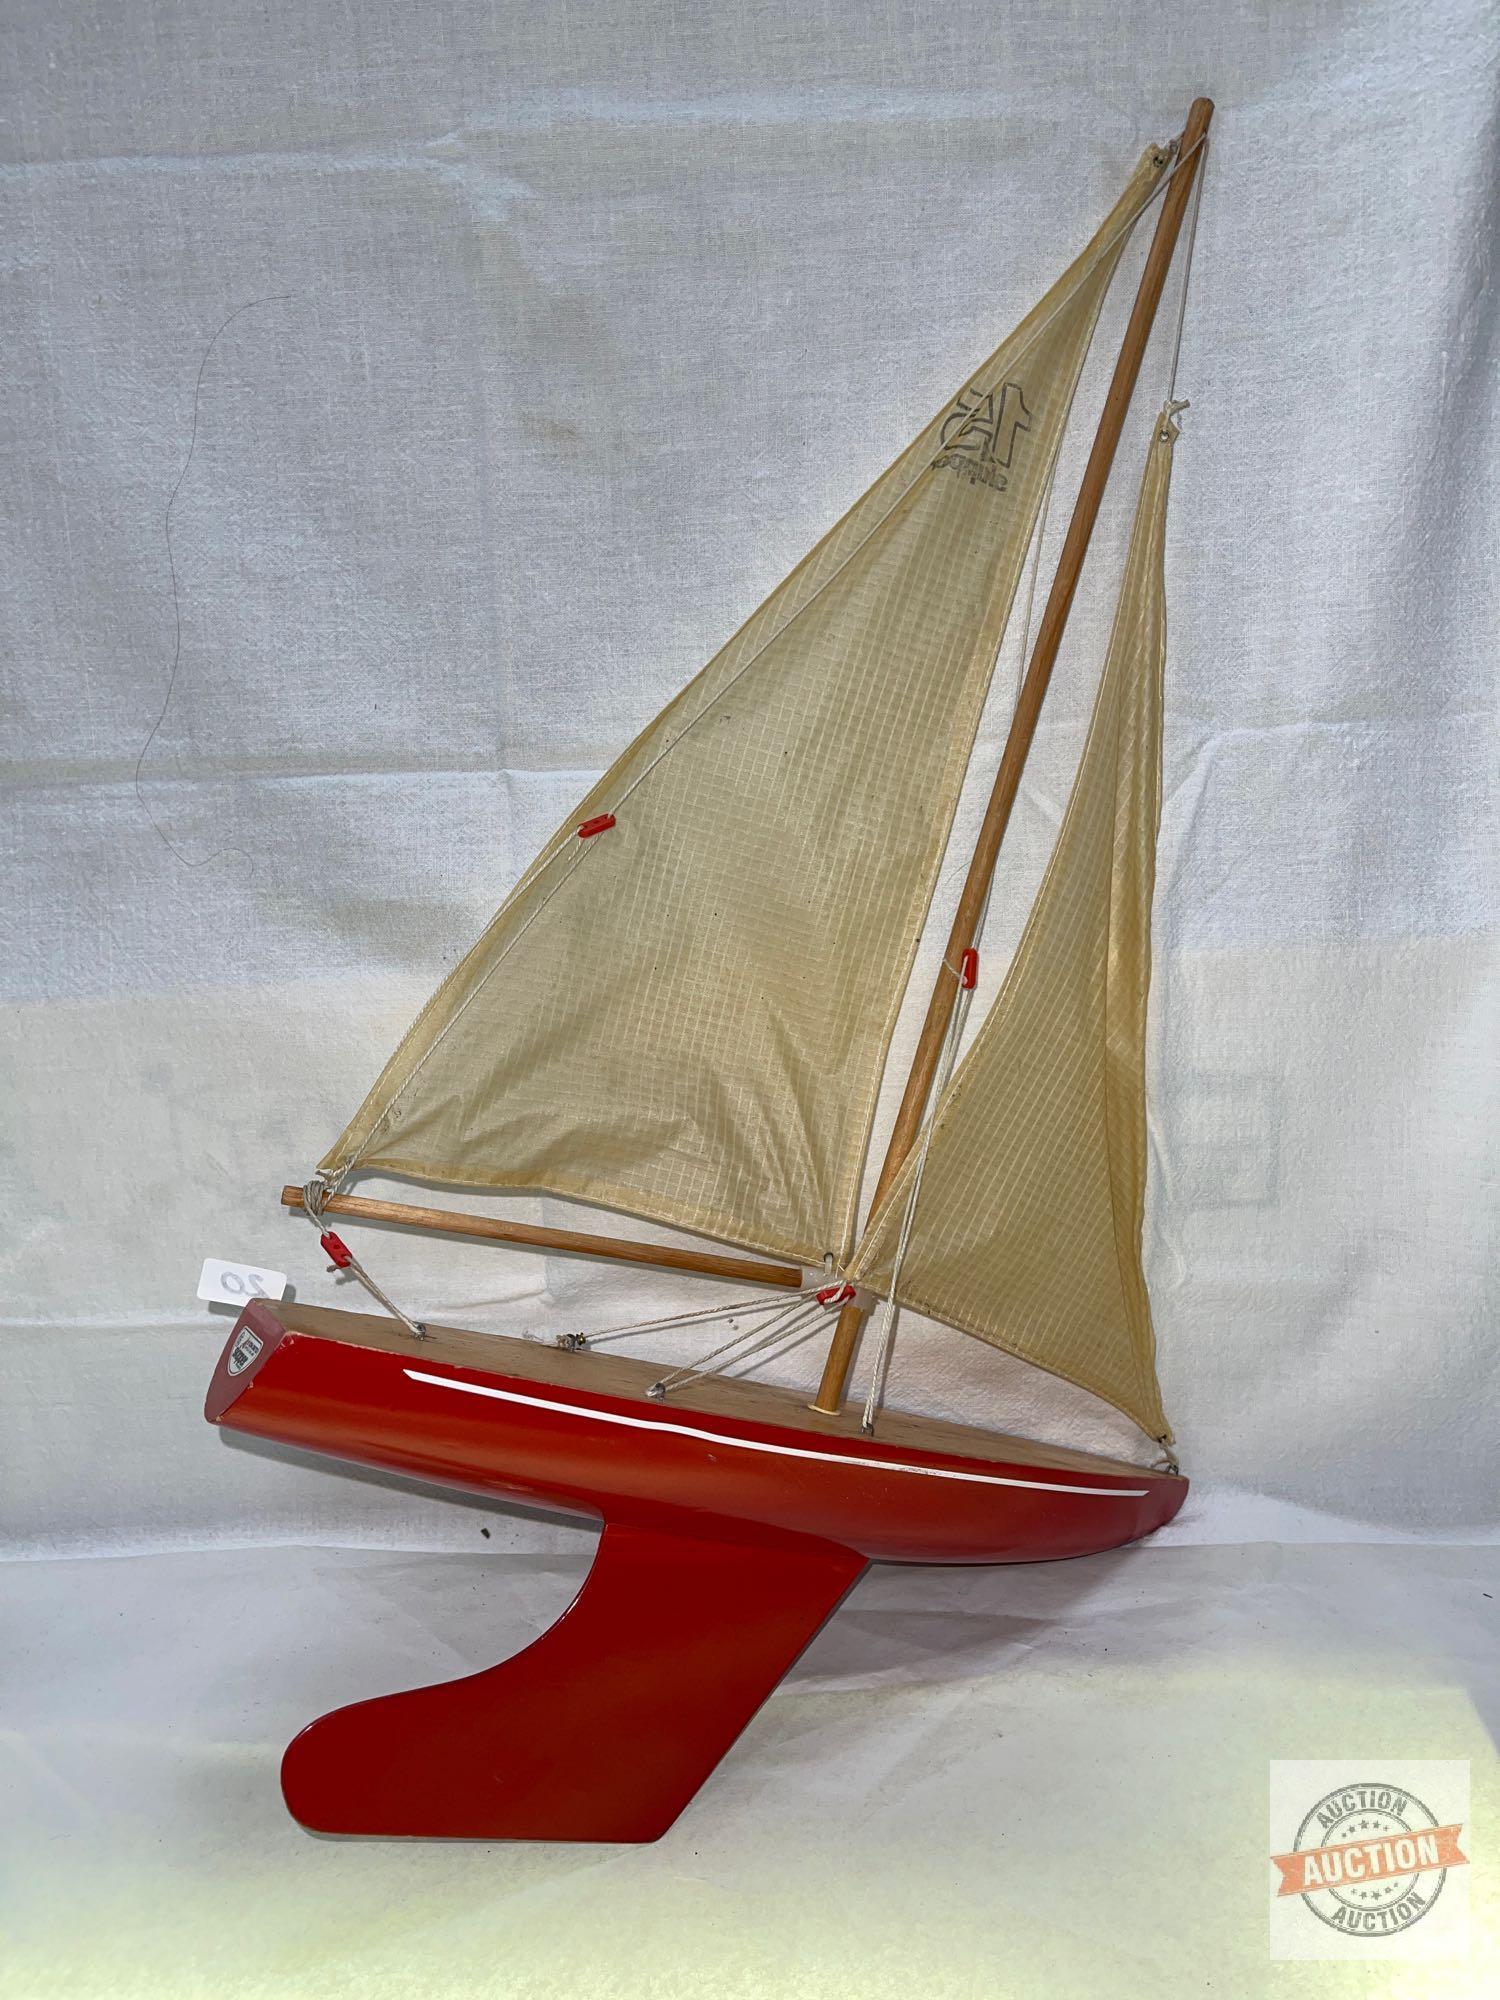 Wooden Toy Sail boar, Skipper Yacht 15"wx24"h